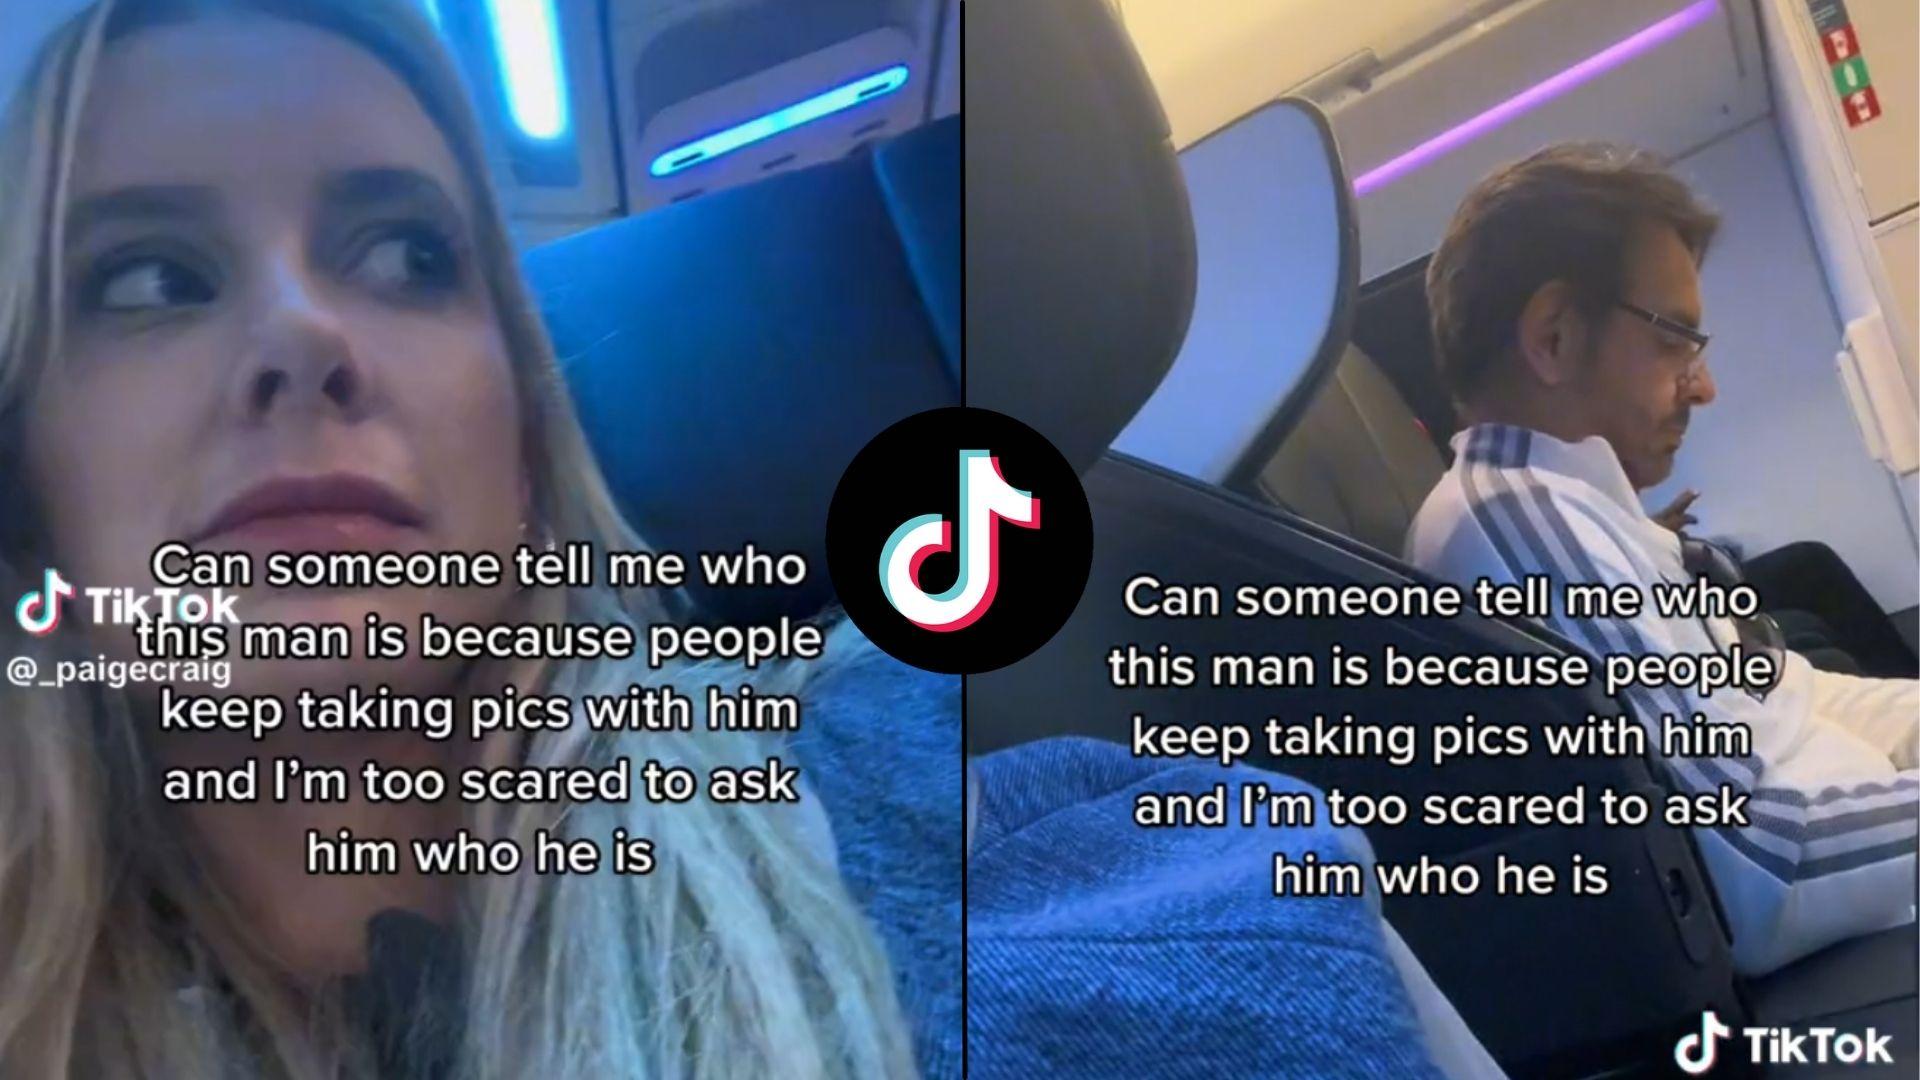 Screenshots of woman taking photos on man on plane for TikTok